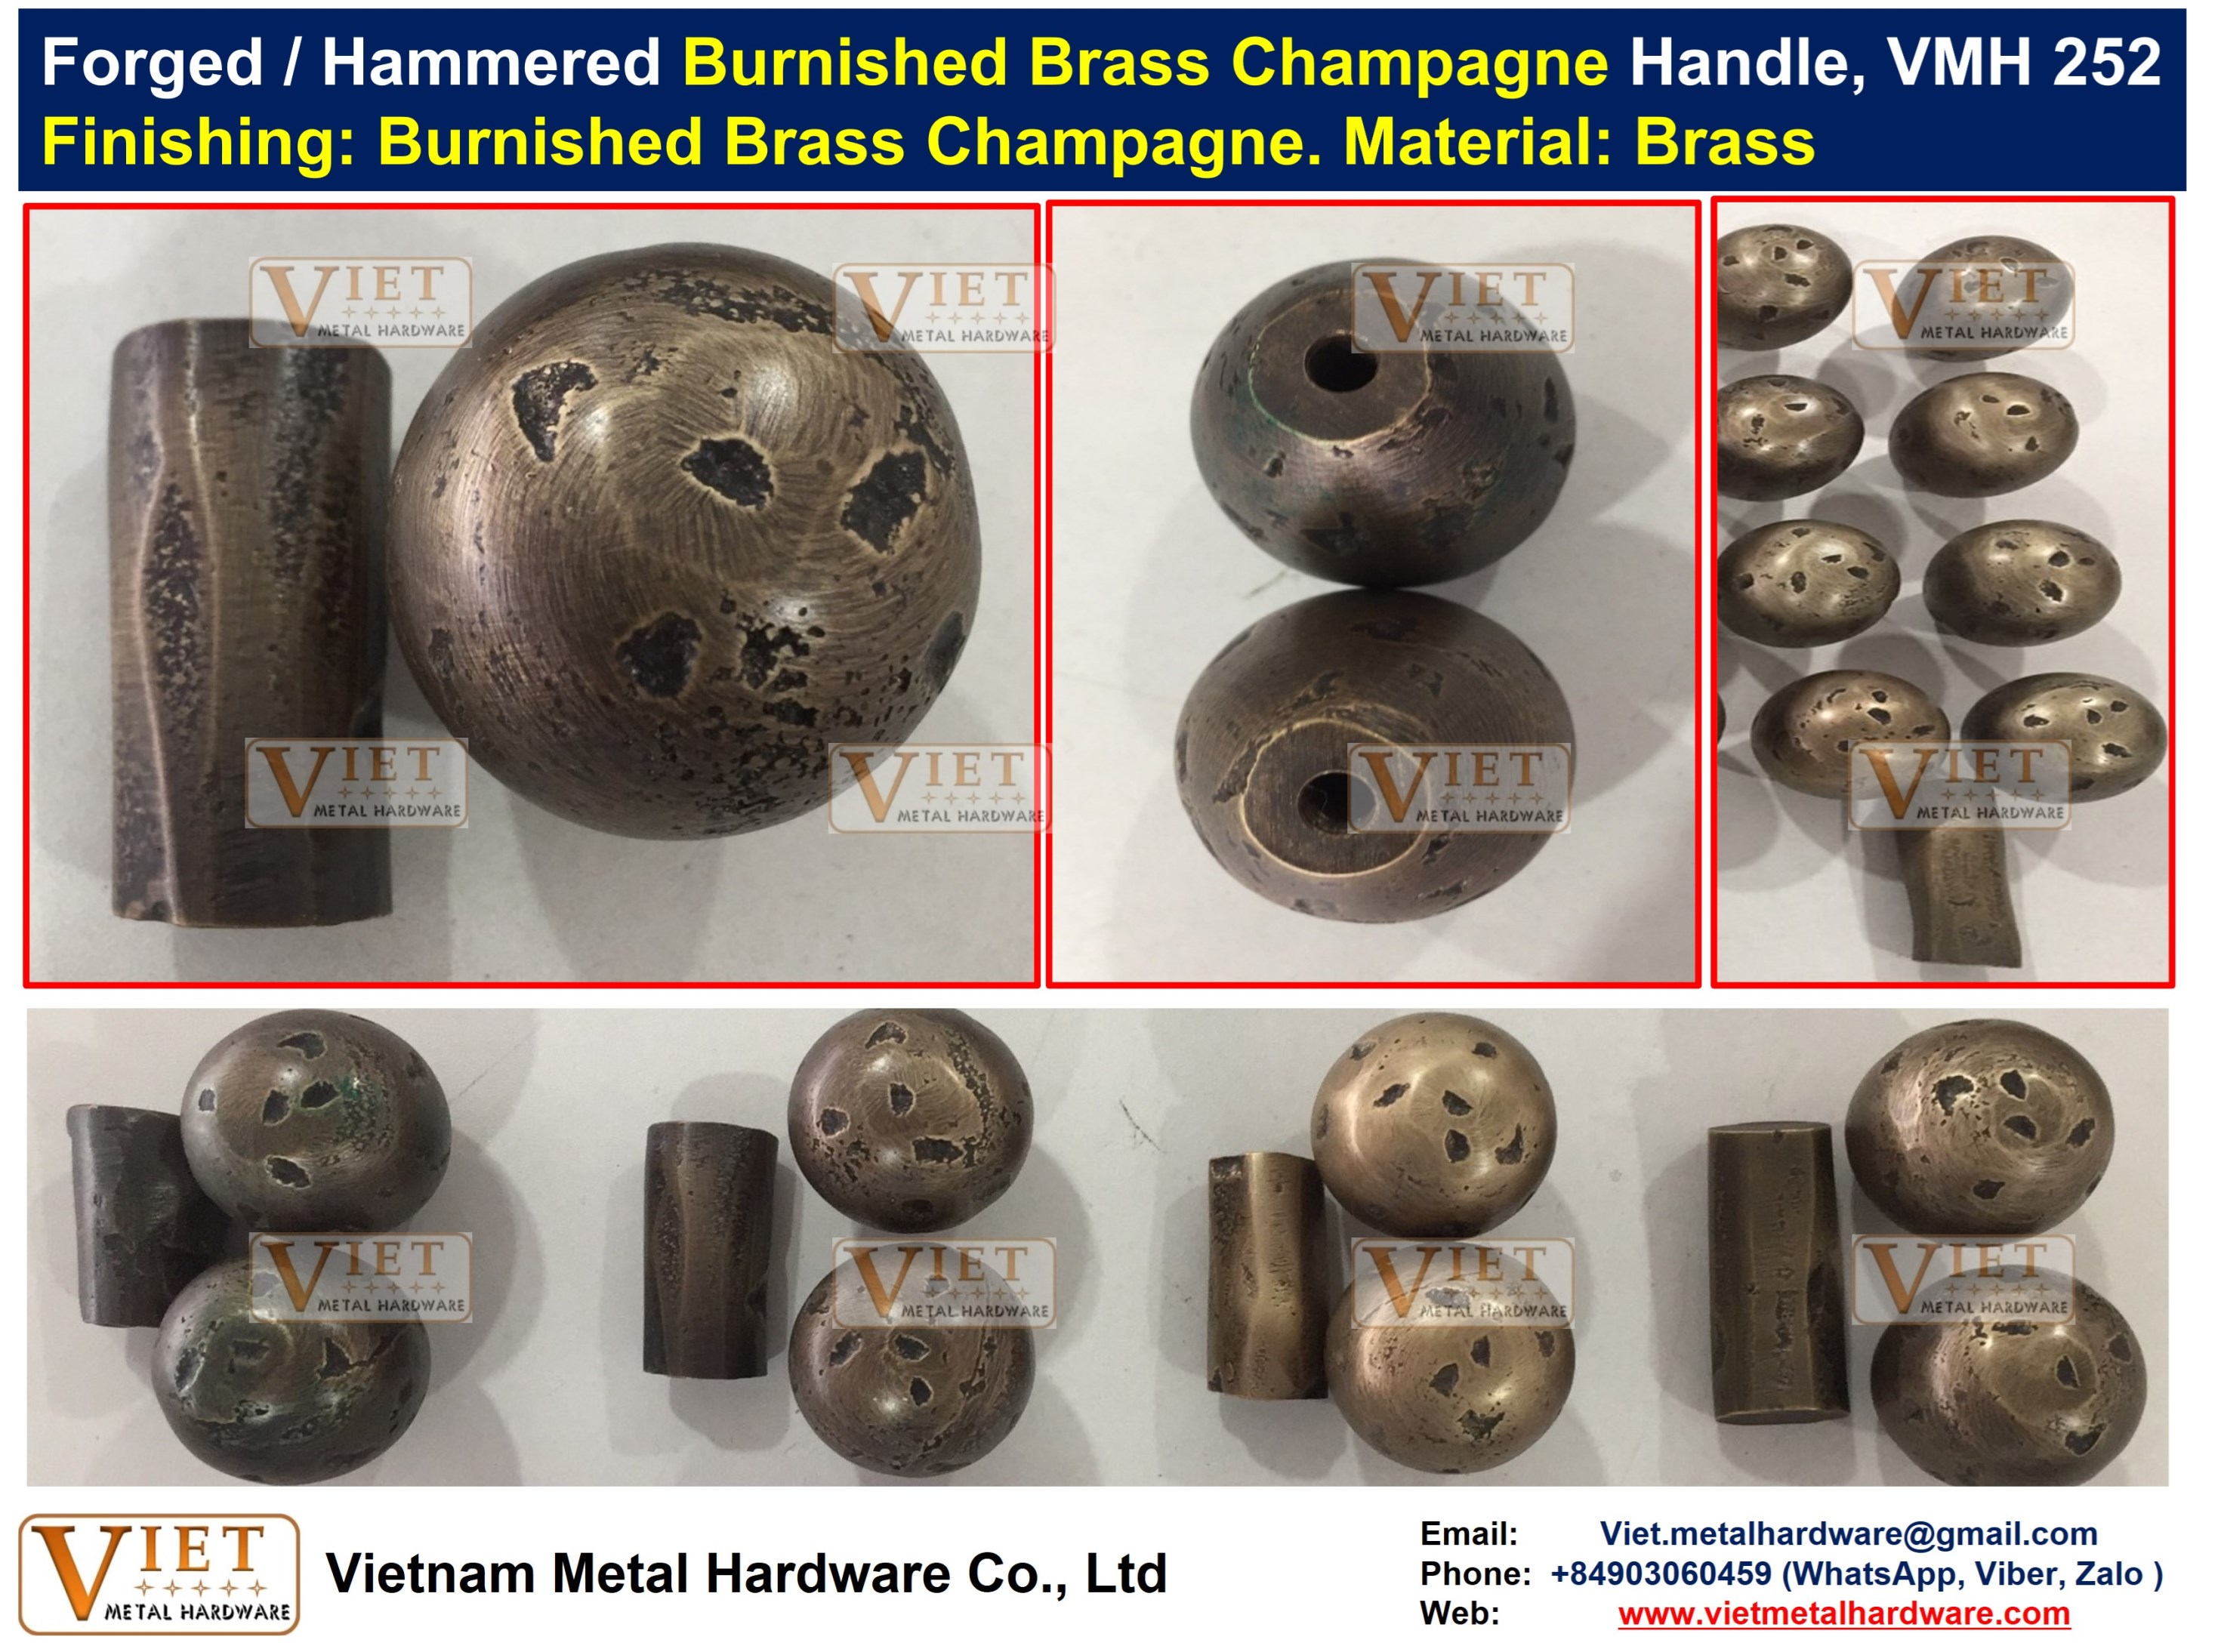 https://bizweb.dktcdn.net/100/364/428/products/forged-hammered-burnished-brass-champagne-handle-vmh-252-copy-341a59fc-b5d8-4432-80c5-db2ac87683d3.jpg?v=1629885683350